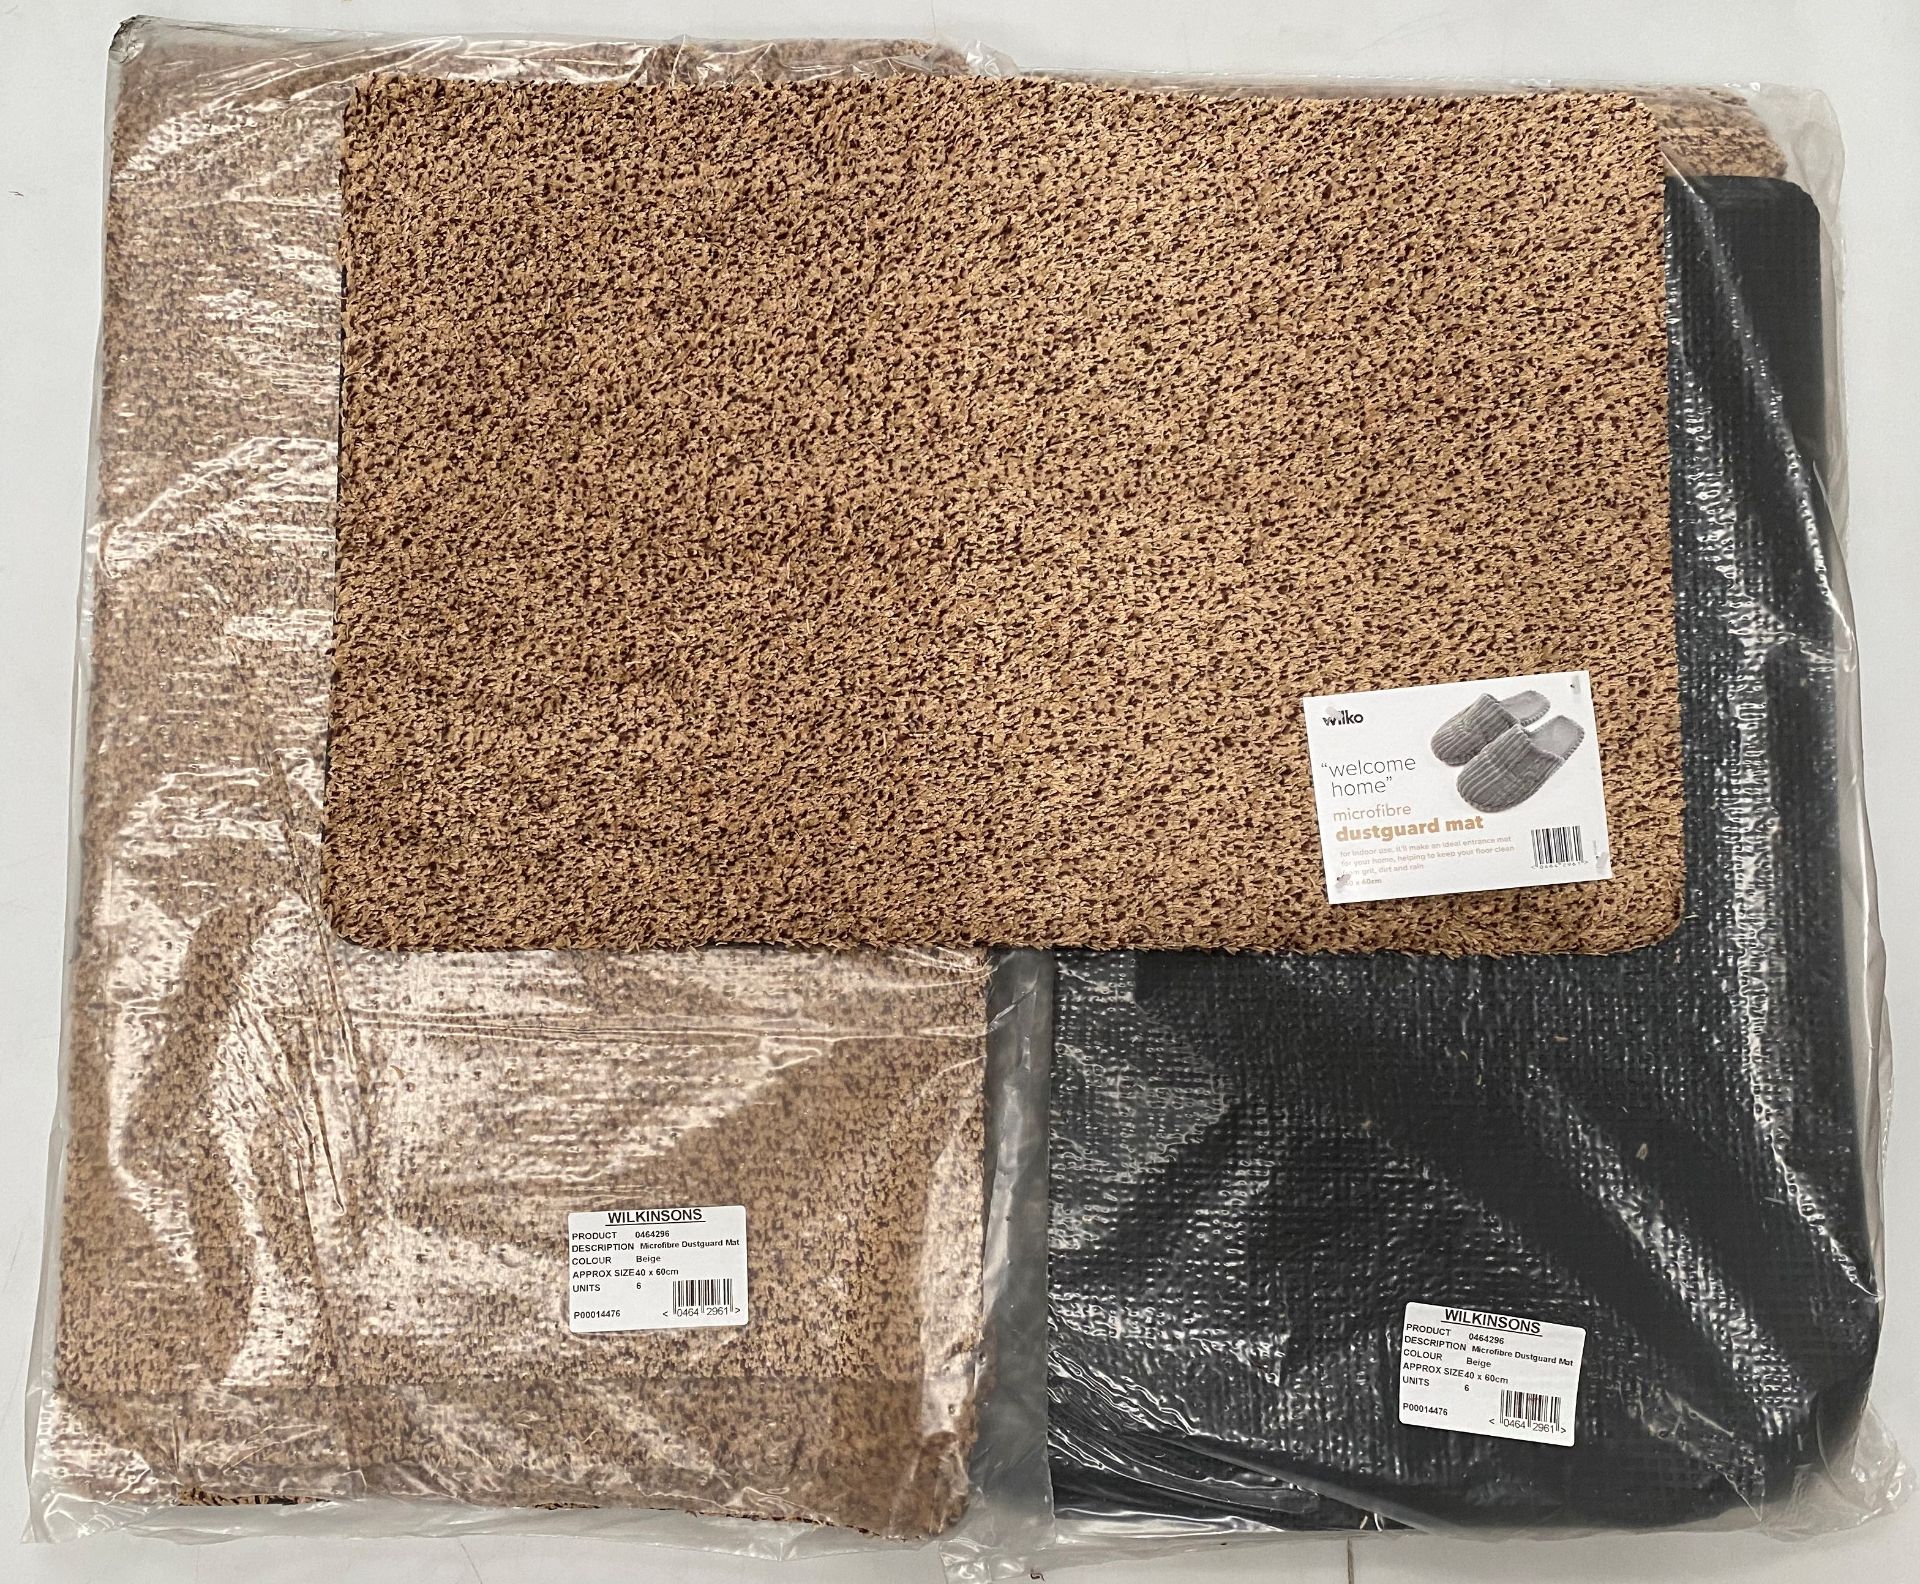 12 x Wilko 'Welcome Home' microfibre dustguard mats (2 packs) - 40cm x 60cm approx.